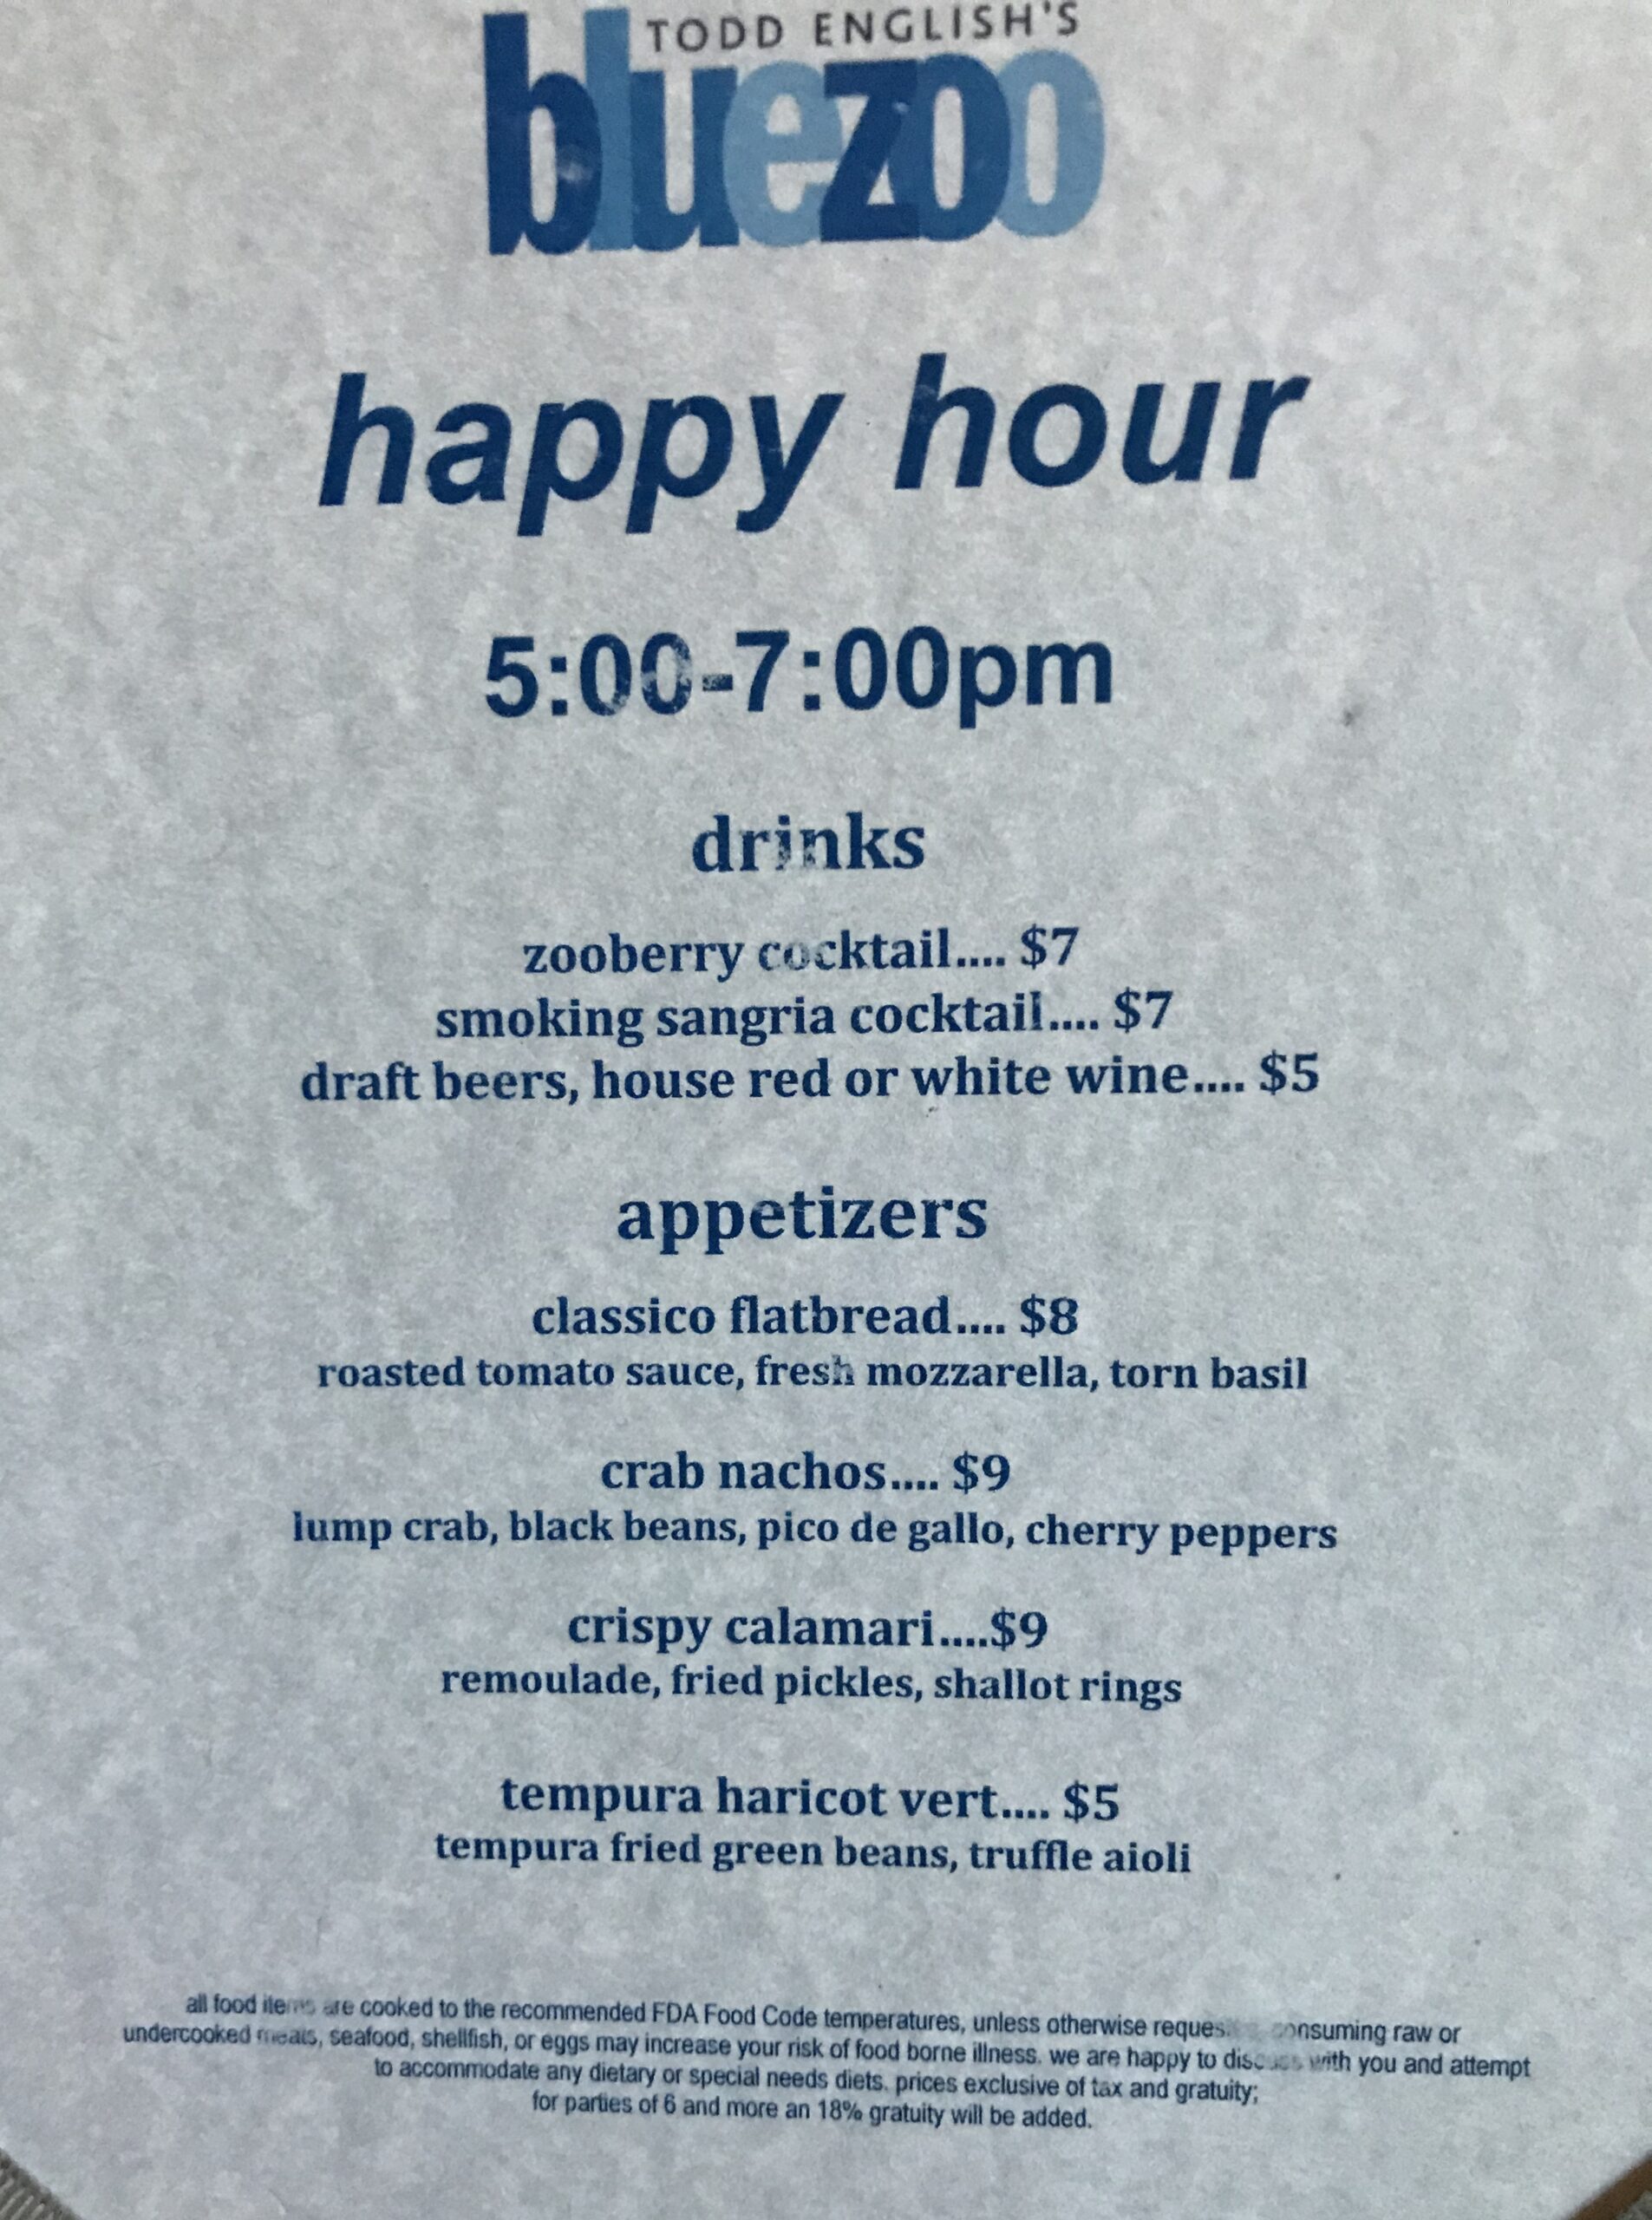 bluezoo happy hour menu